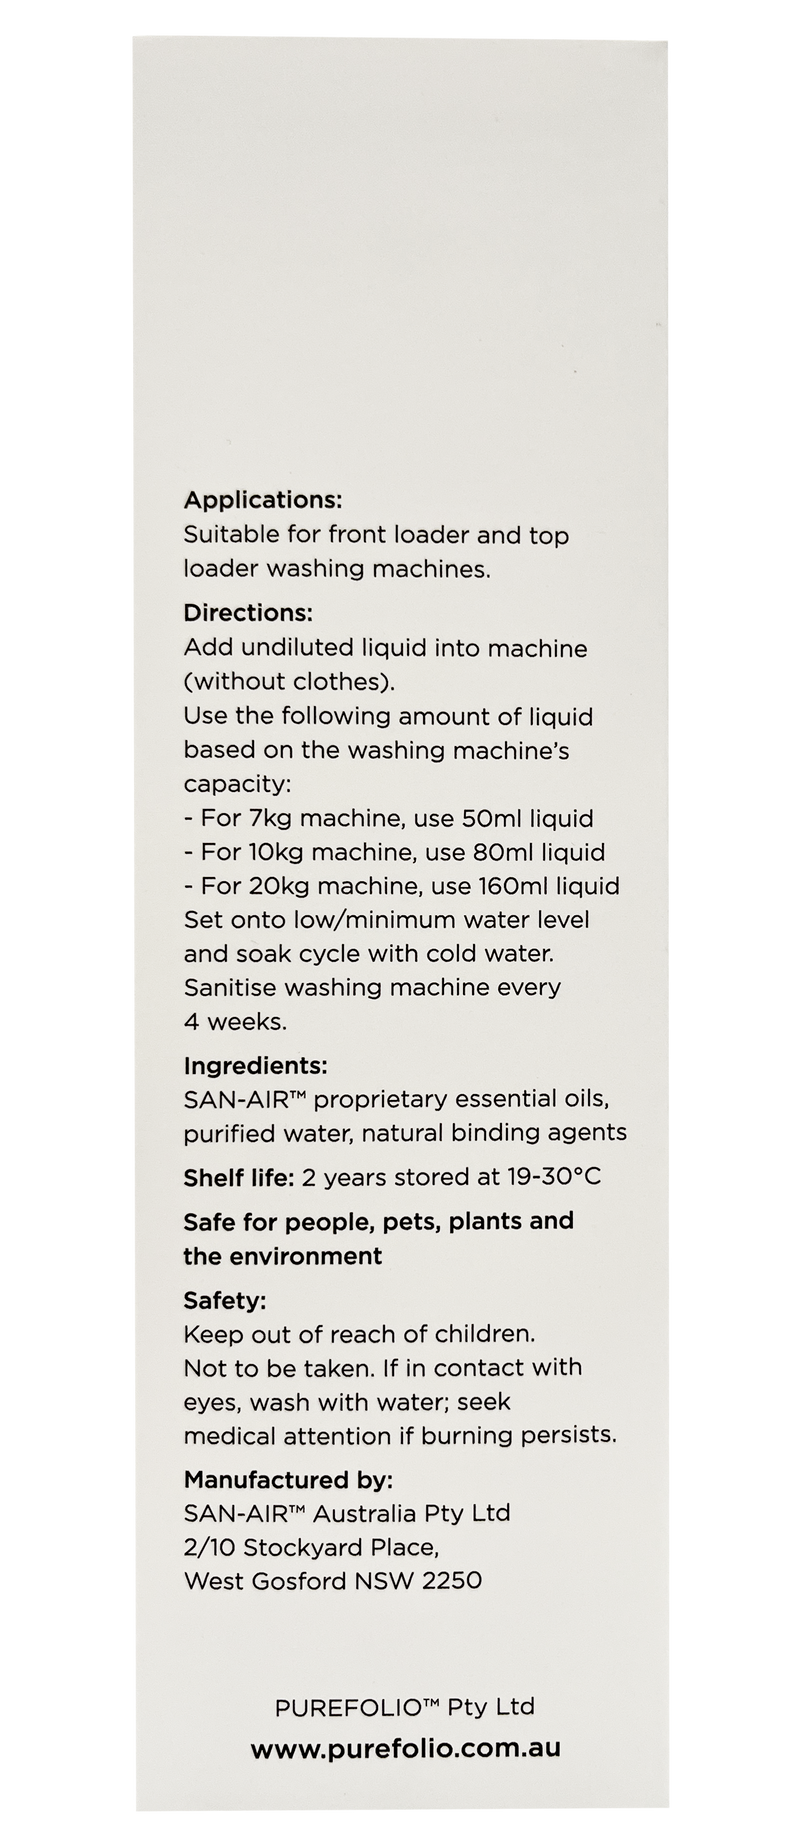 PUREFOLIO Washing Machine Sanitiser Concentrate  250ml